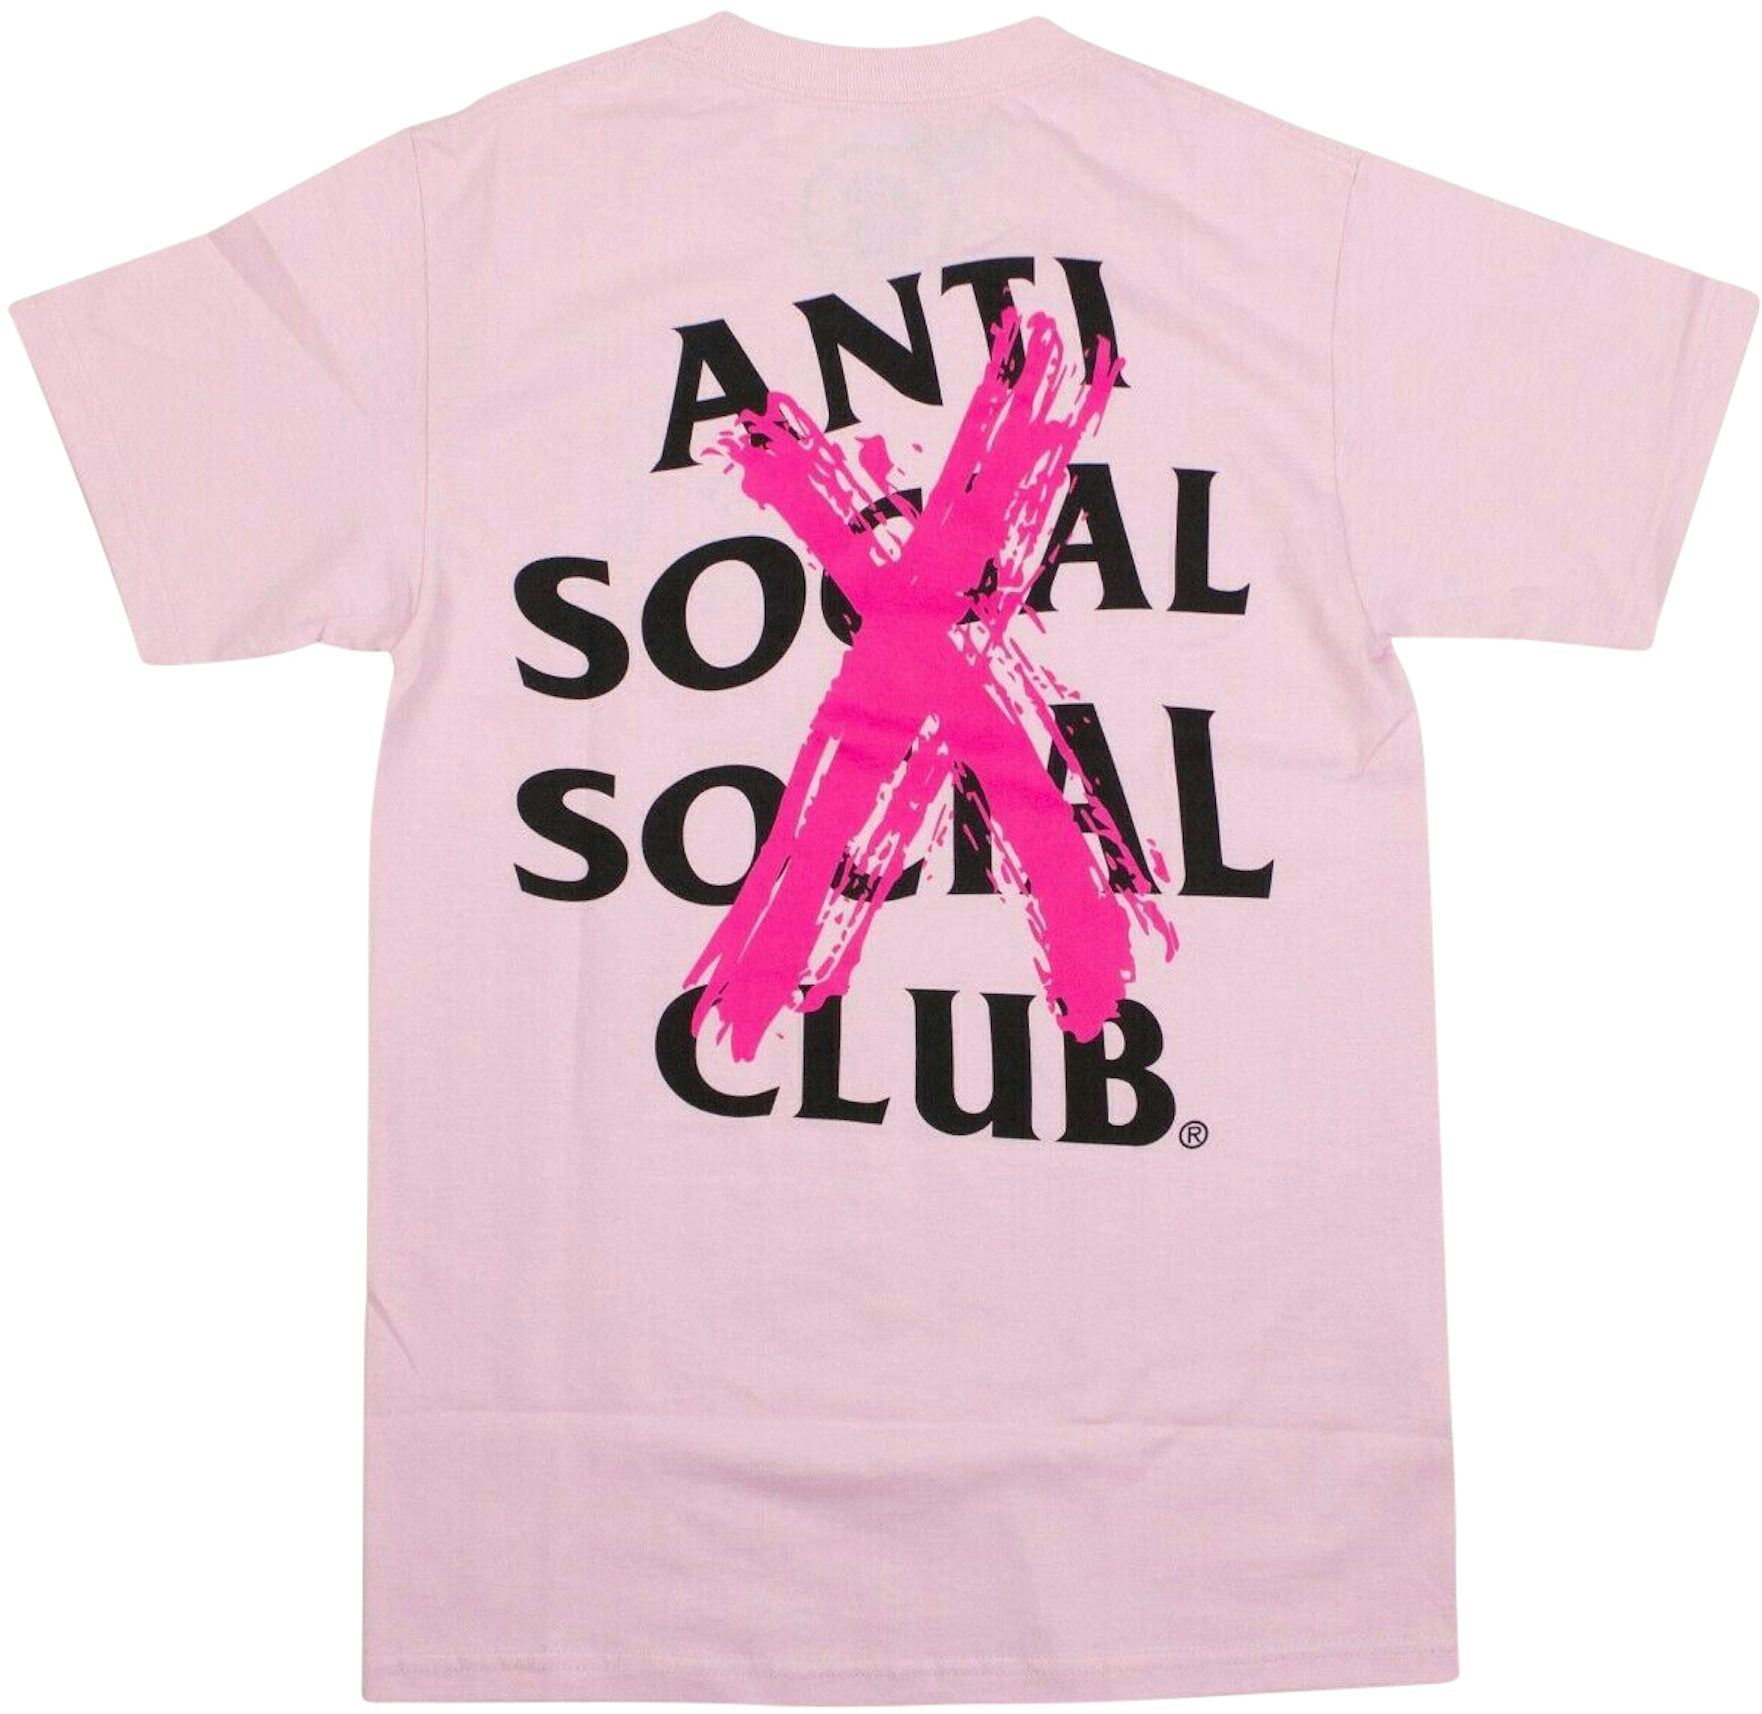  Plain Pink T Shirts For Men, Women, Boys, Girls, Teens